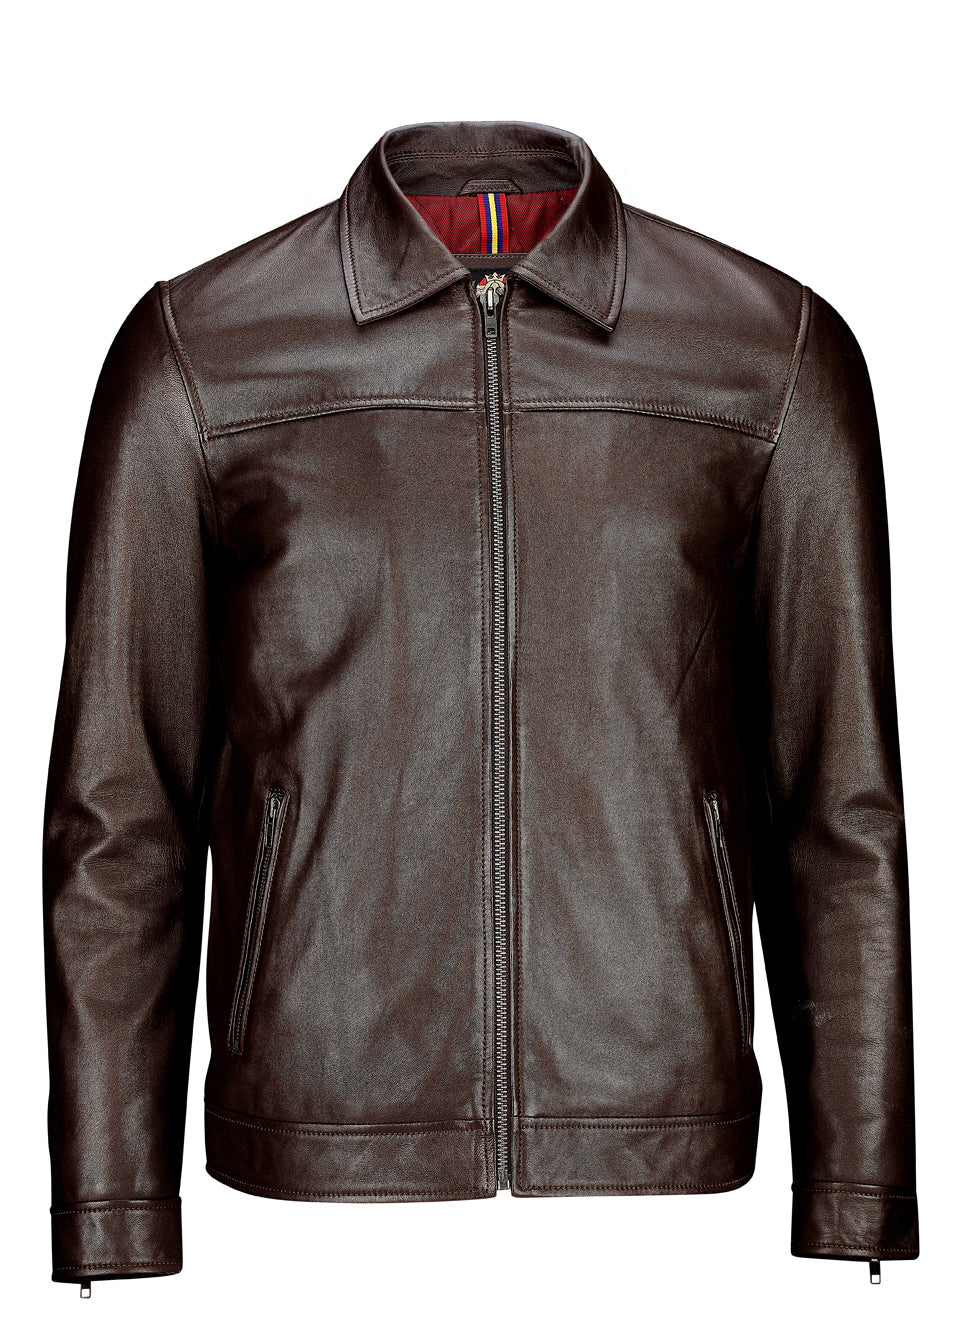 Men's Chocolate Brown Color Padded Motorcycle Fashion Leather Jacket |  leathersguru